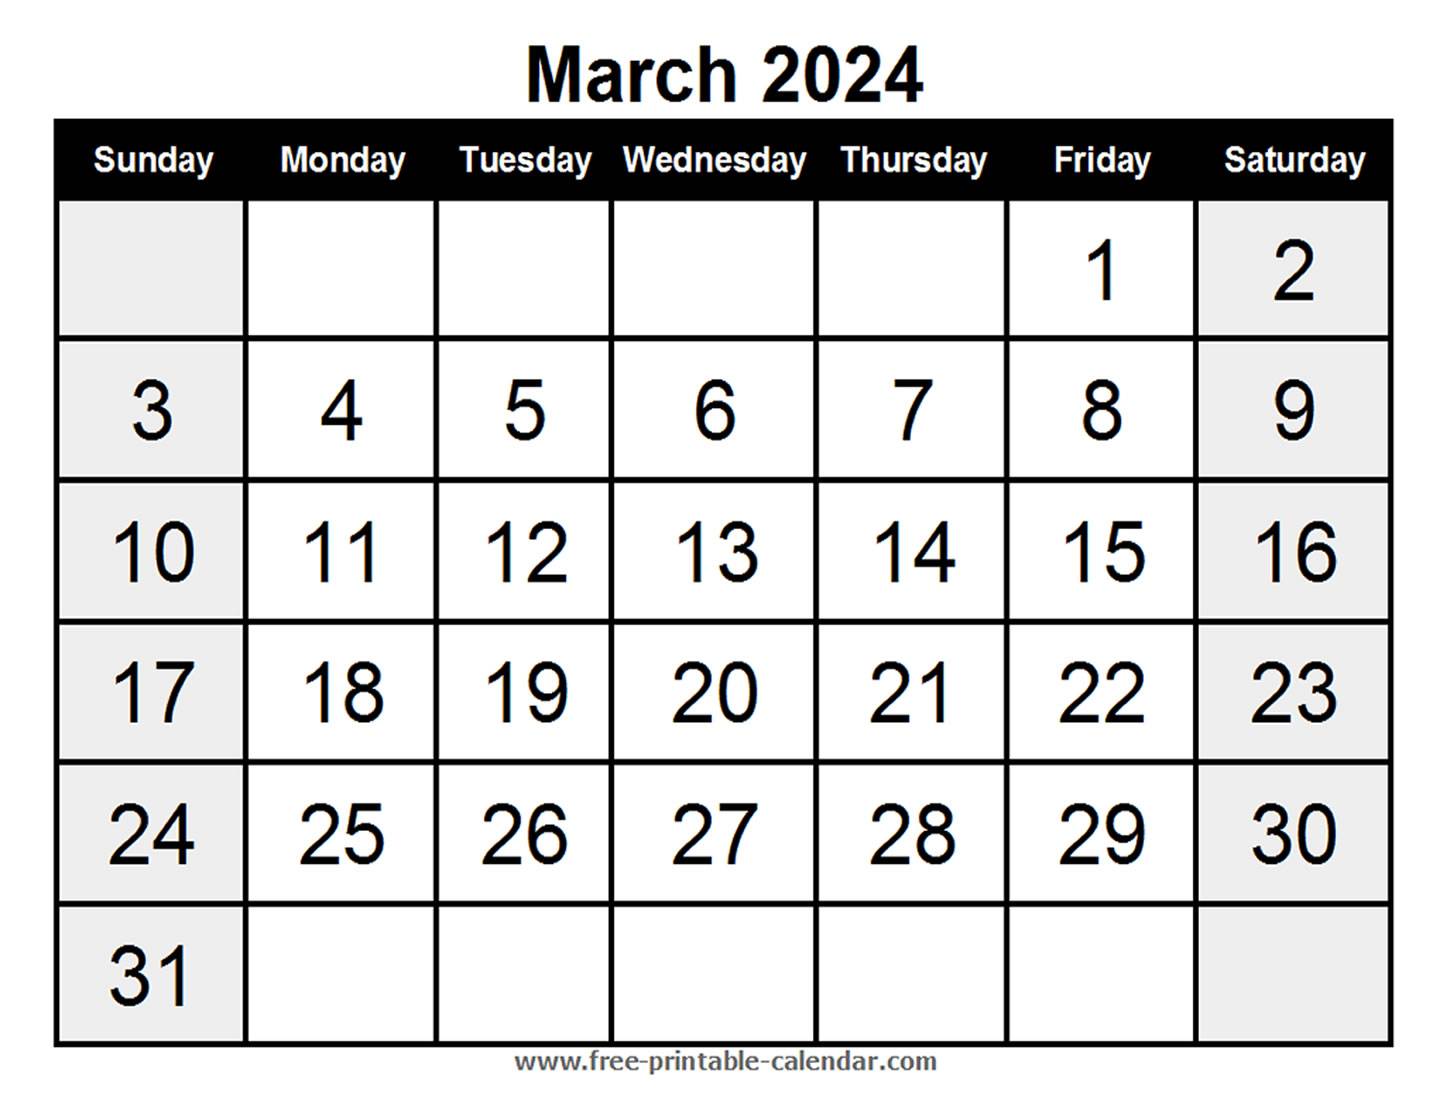 Blank Calendar March 2024 - Free-printable-calendar.com